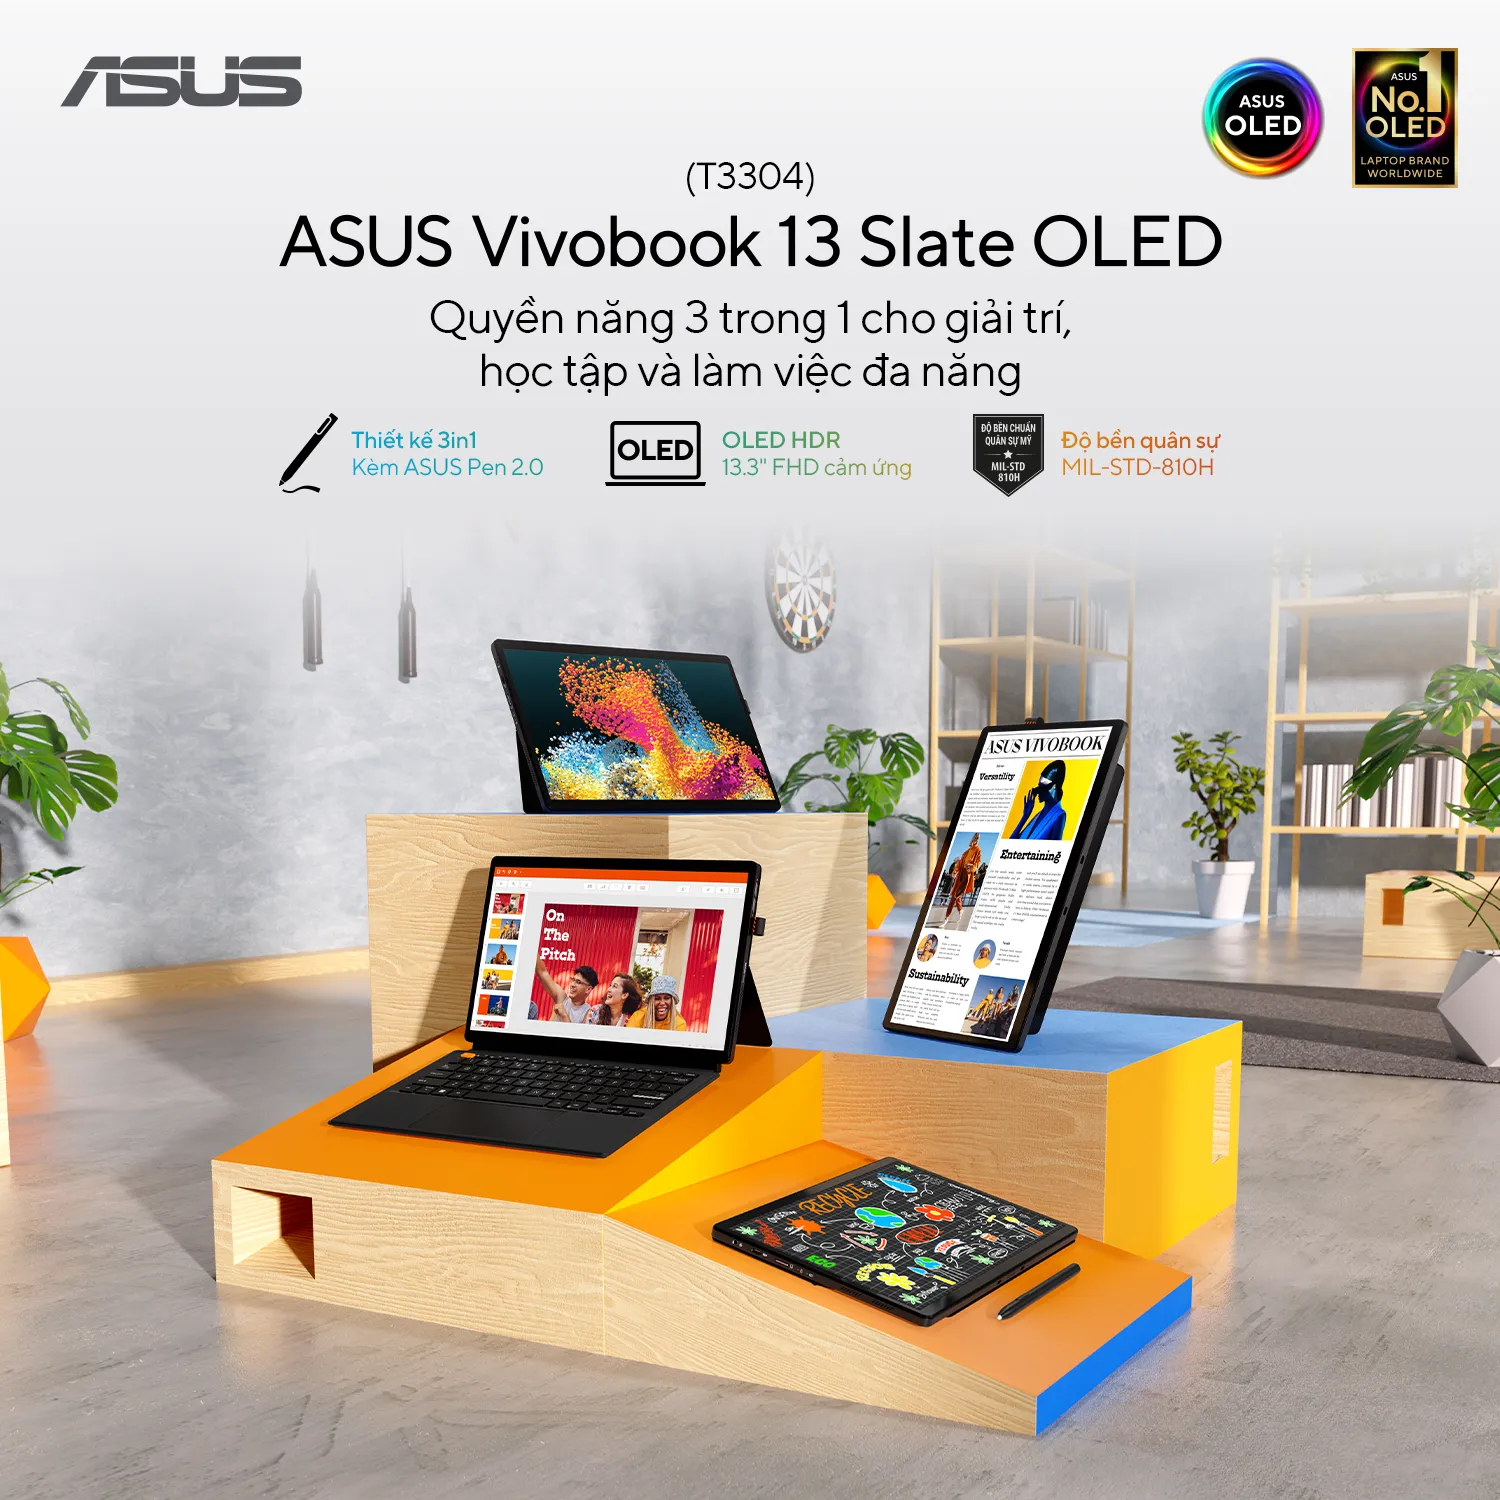 ASUS giới thiệu dòng VivoBook 13 Slate OLED (T3304)